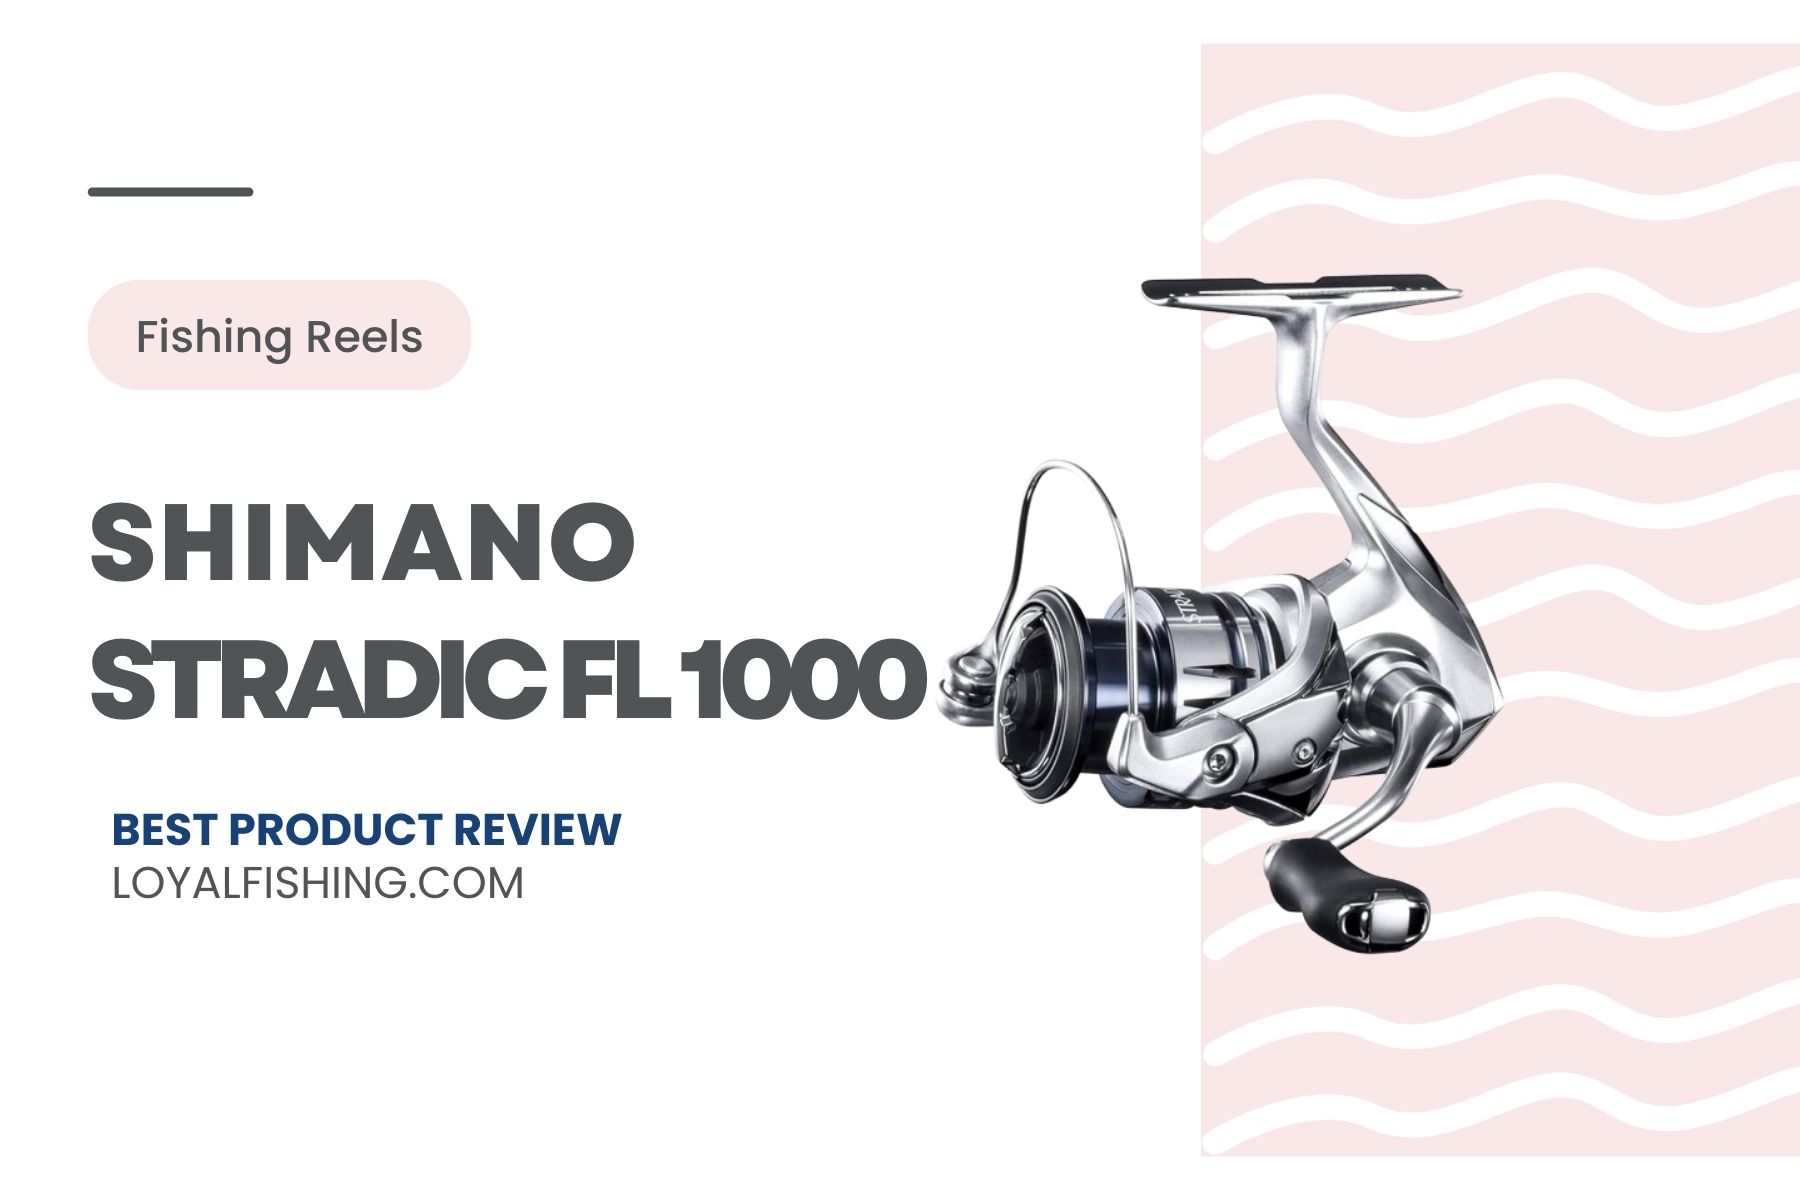 Shimano Stradic FL 1000 - Review Post